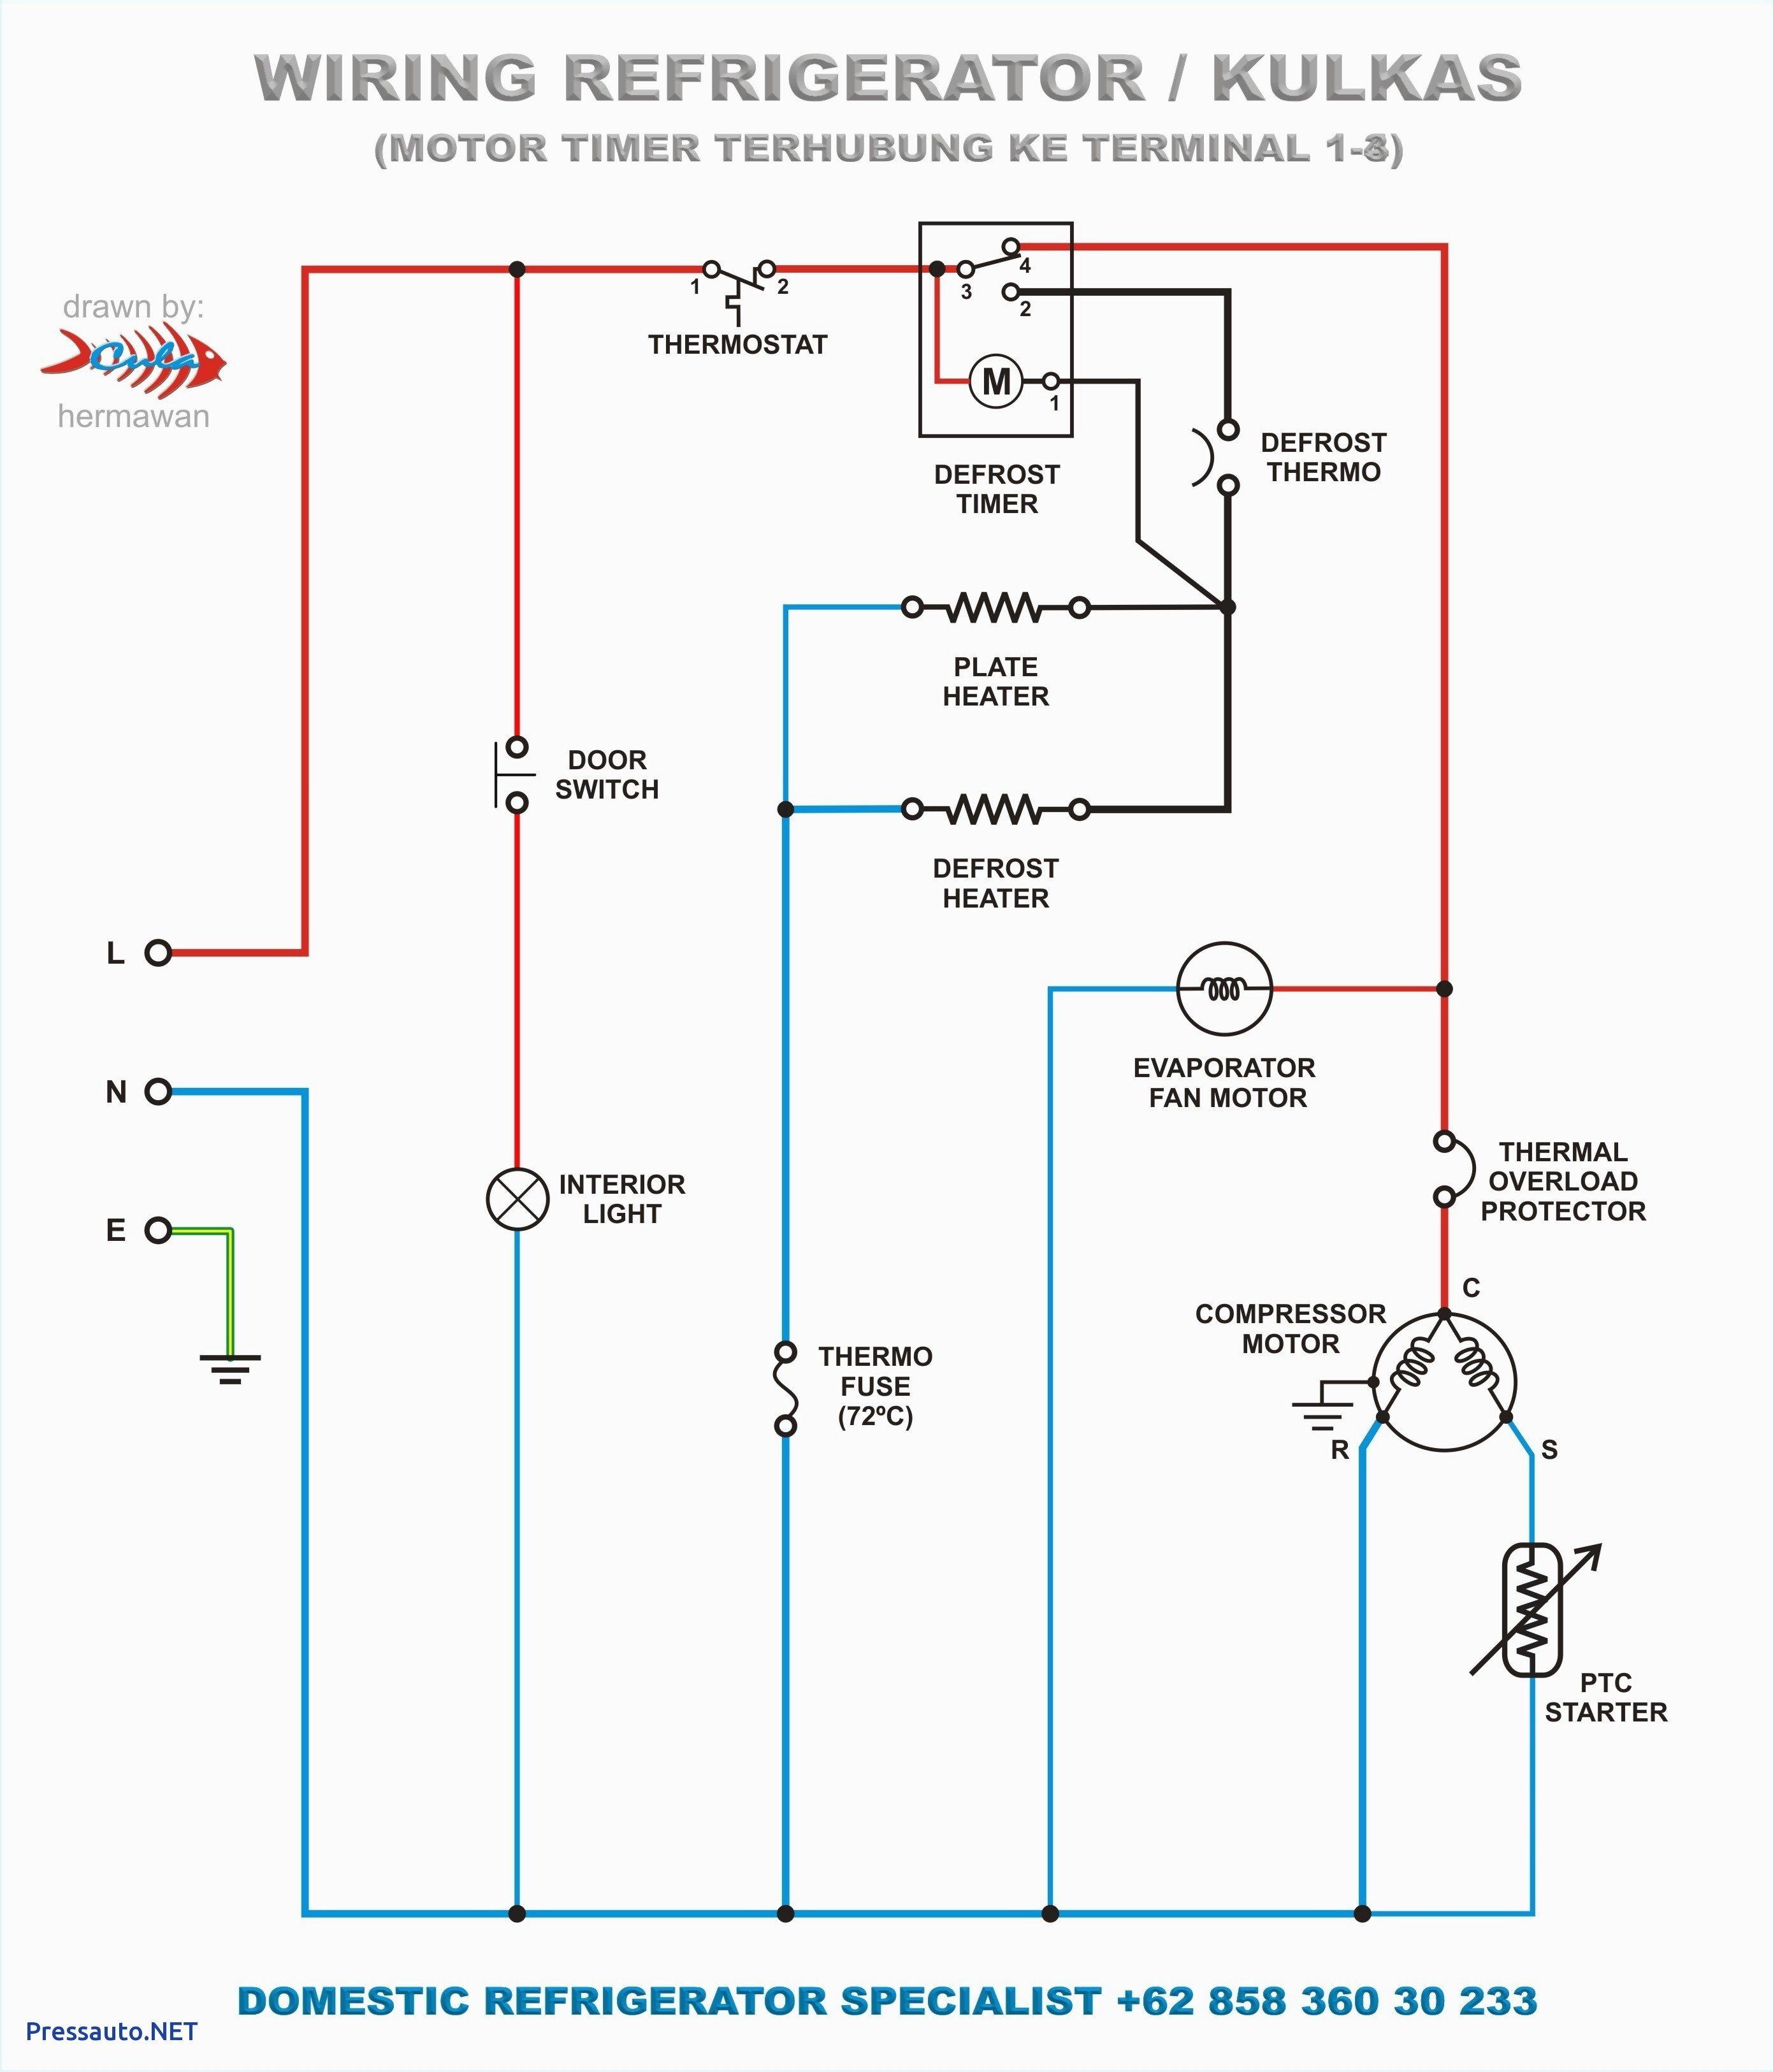 dell studio wiring diagram wiring diagrams konsult dell studio 540 power supply wiring diagram dell studio wiring diagram